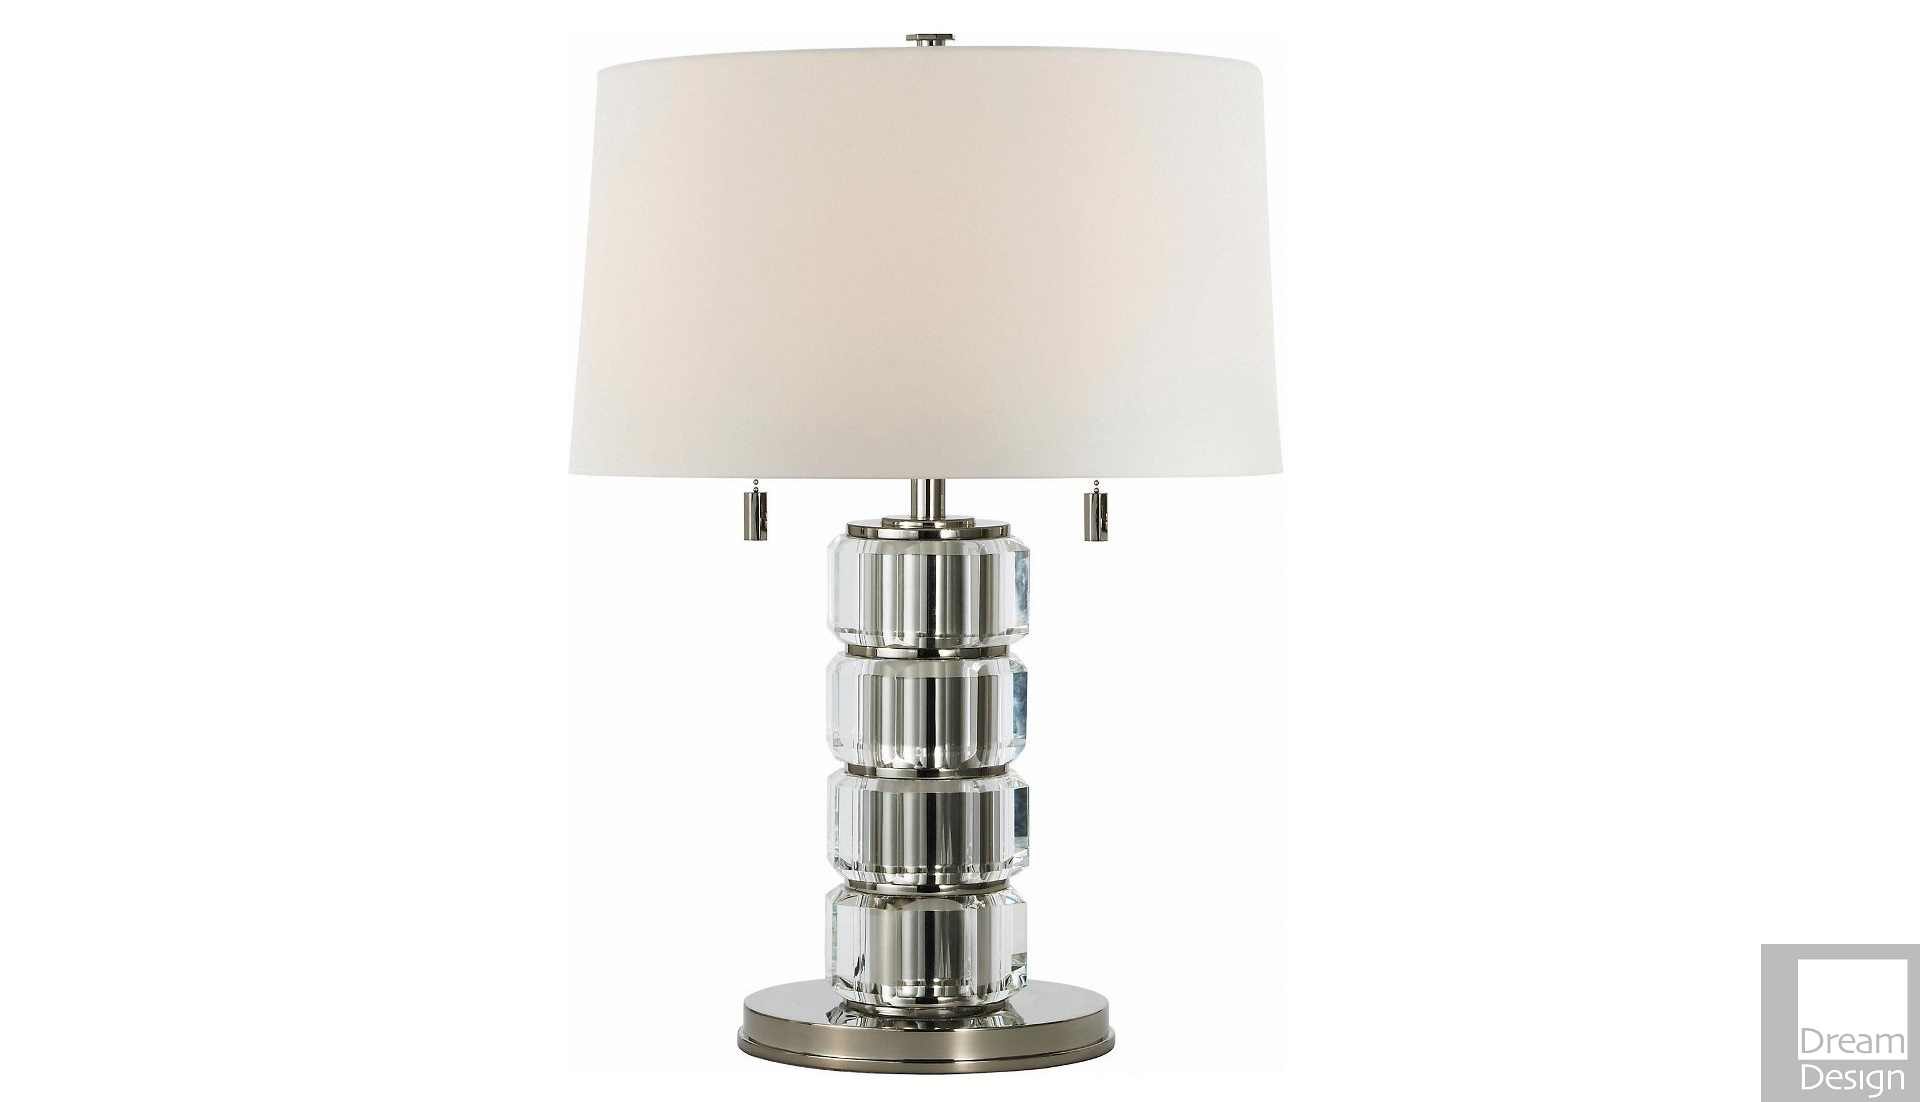 Ralph Lauren Home Brookings Table Lamp, Brookings Large Table Lamp